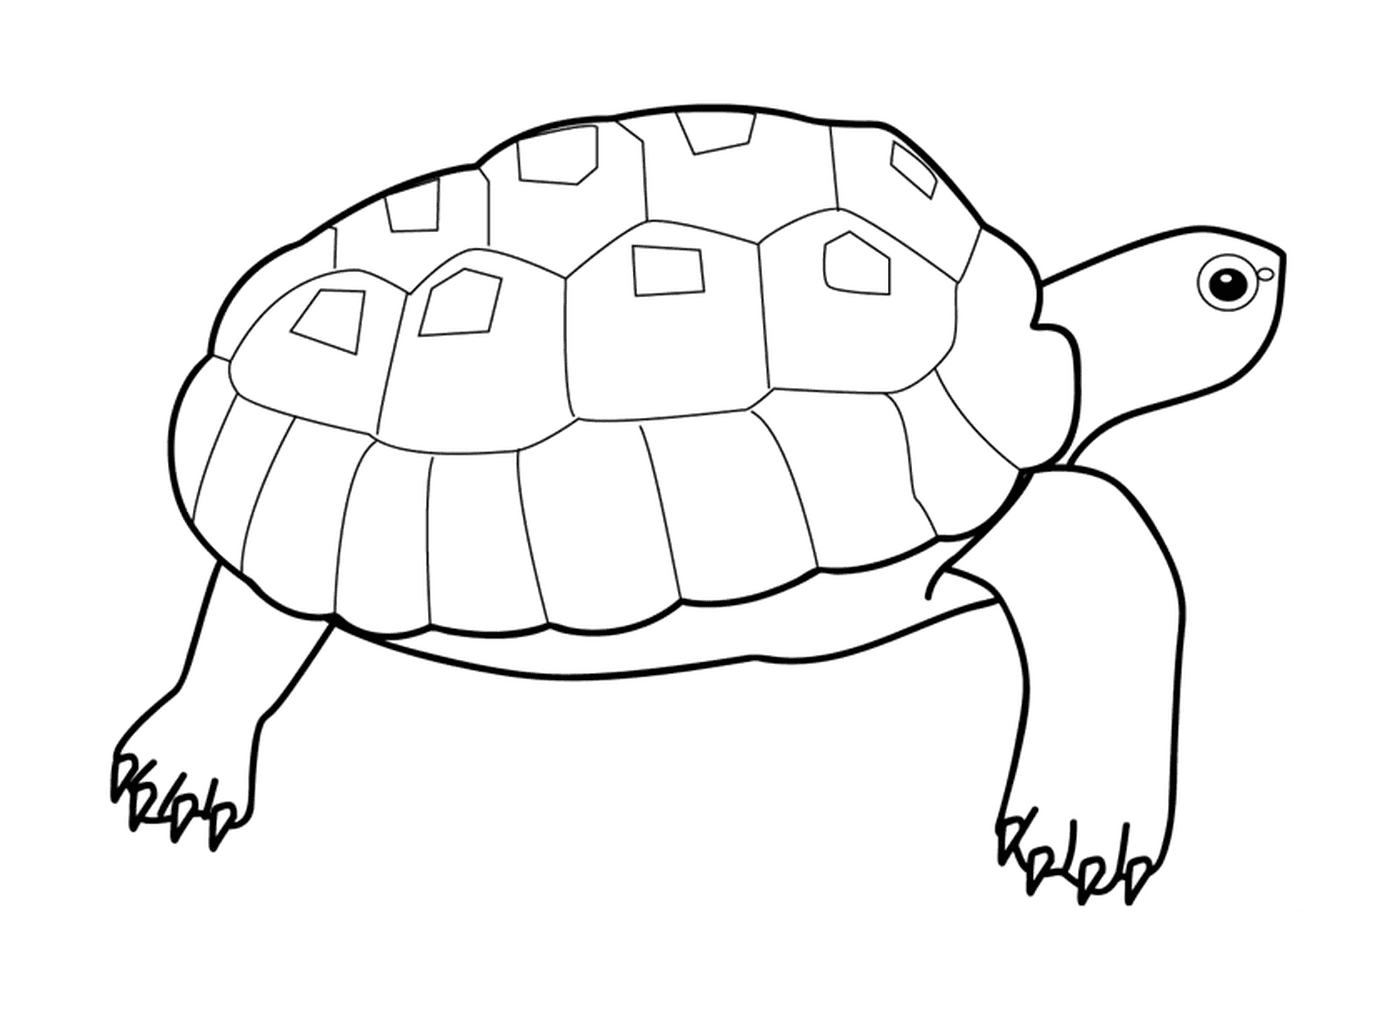  Una tortuga 